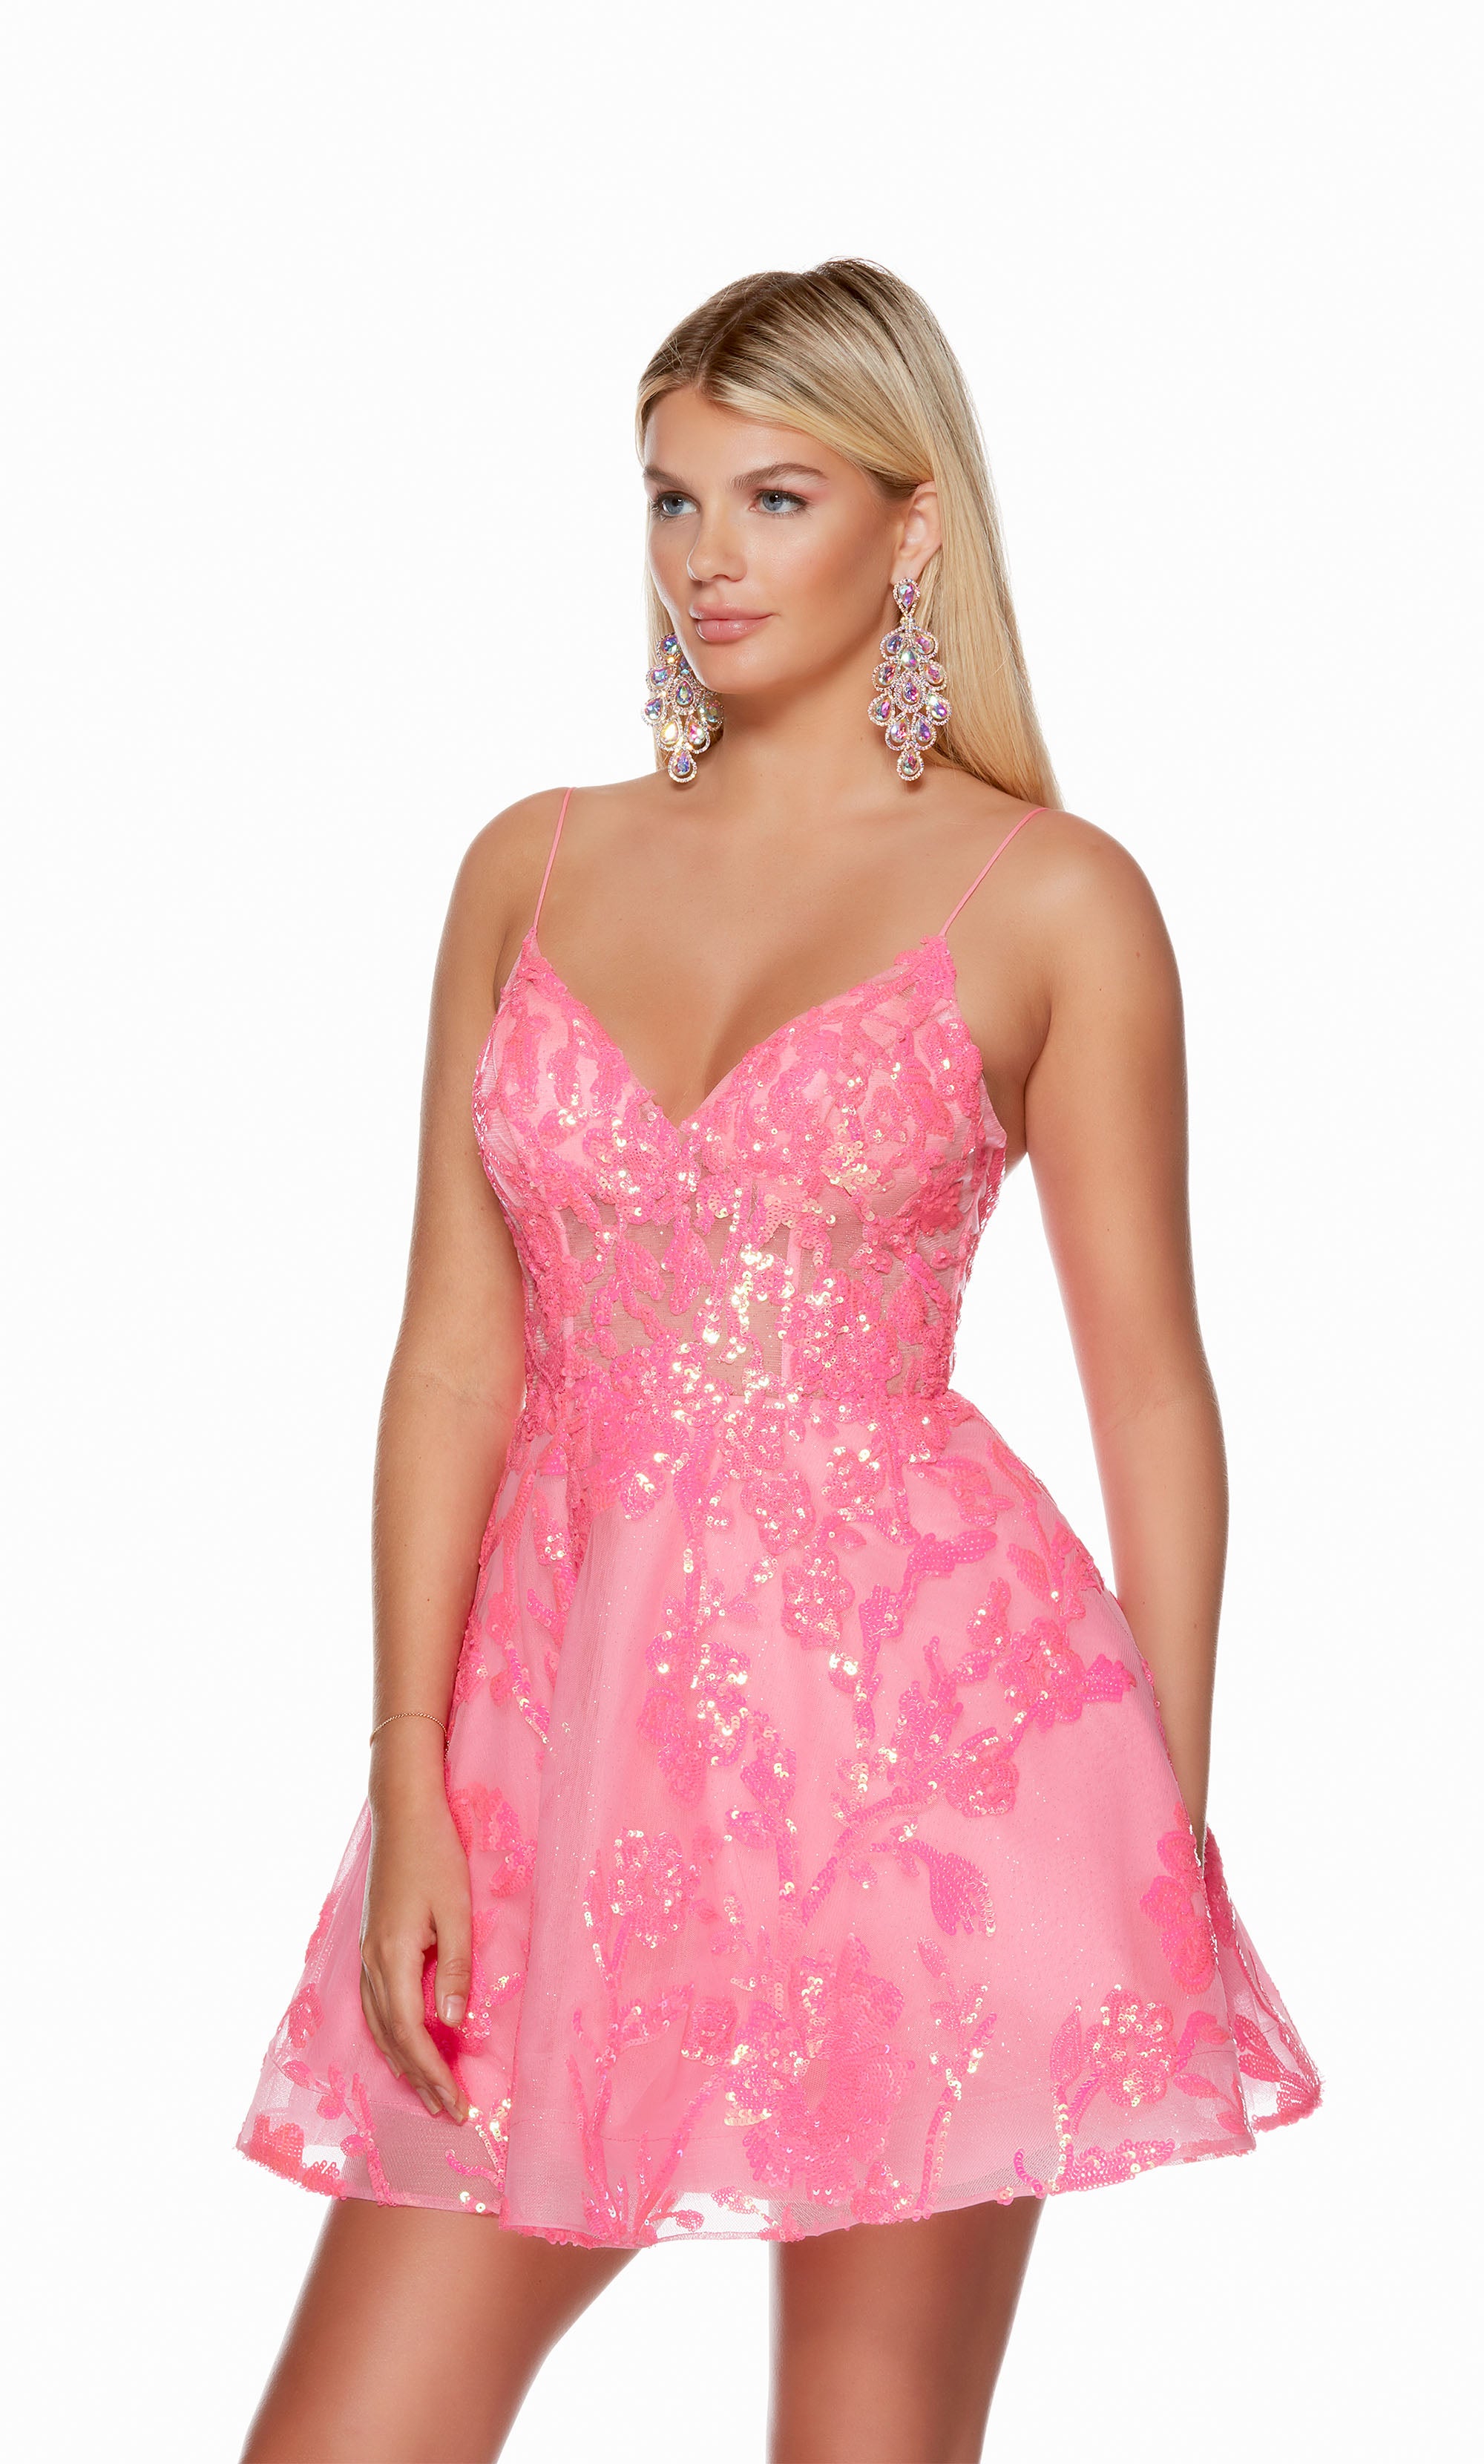 Strapless Short Pink Lace Prom Dresses, Short Pink Lace Graduation